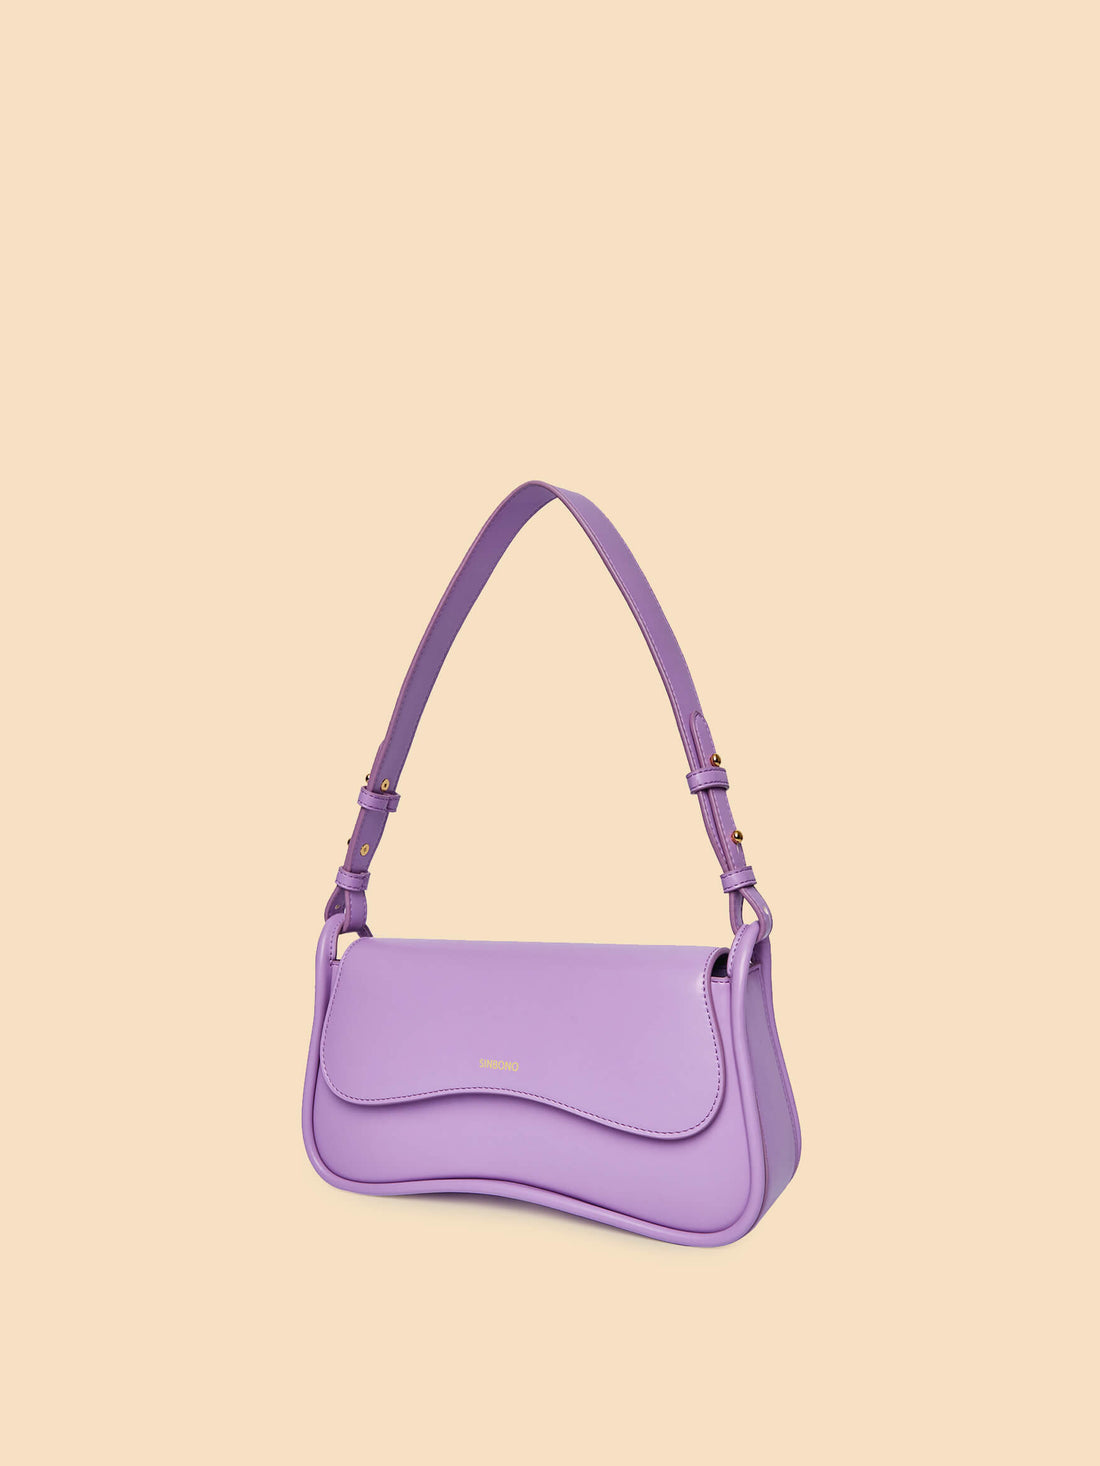 SINBONO Zoe Leather Shoulder Bag Purple - Animal Free Leather Bag